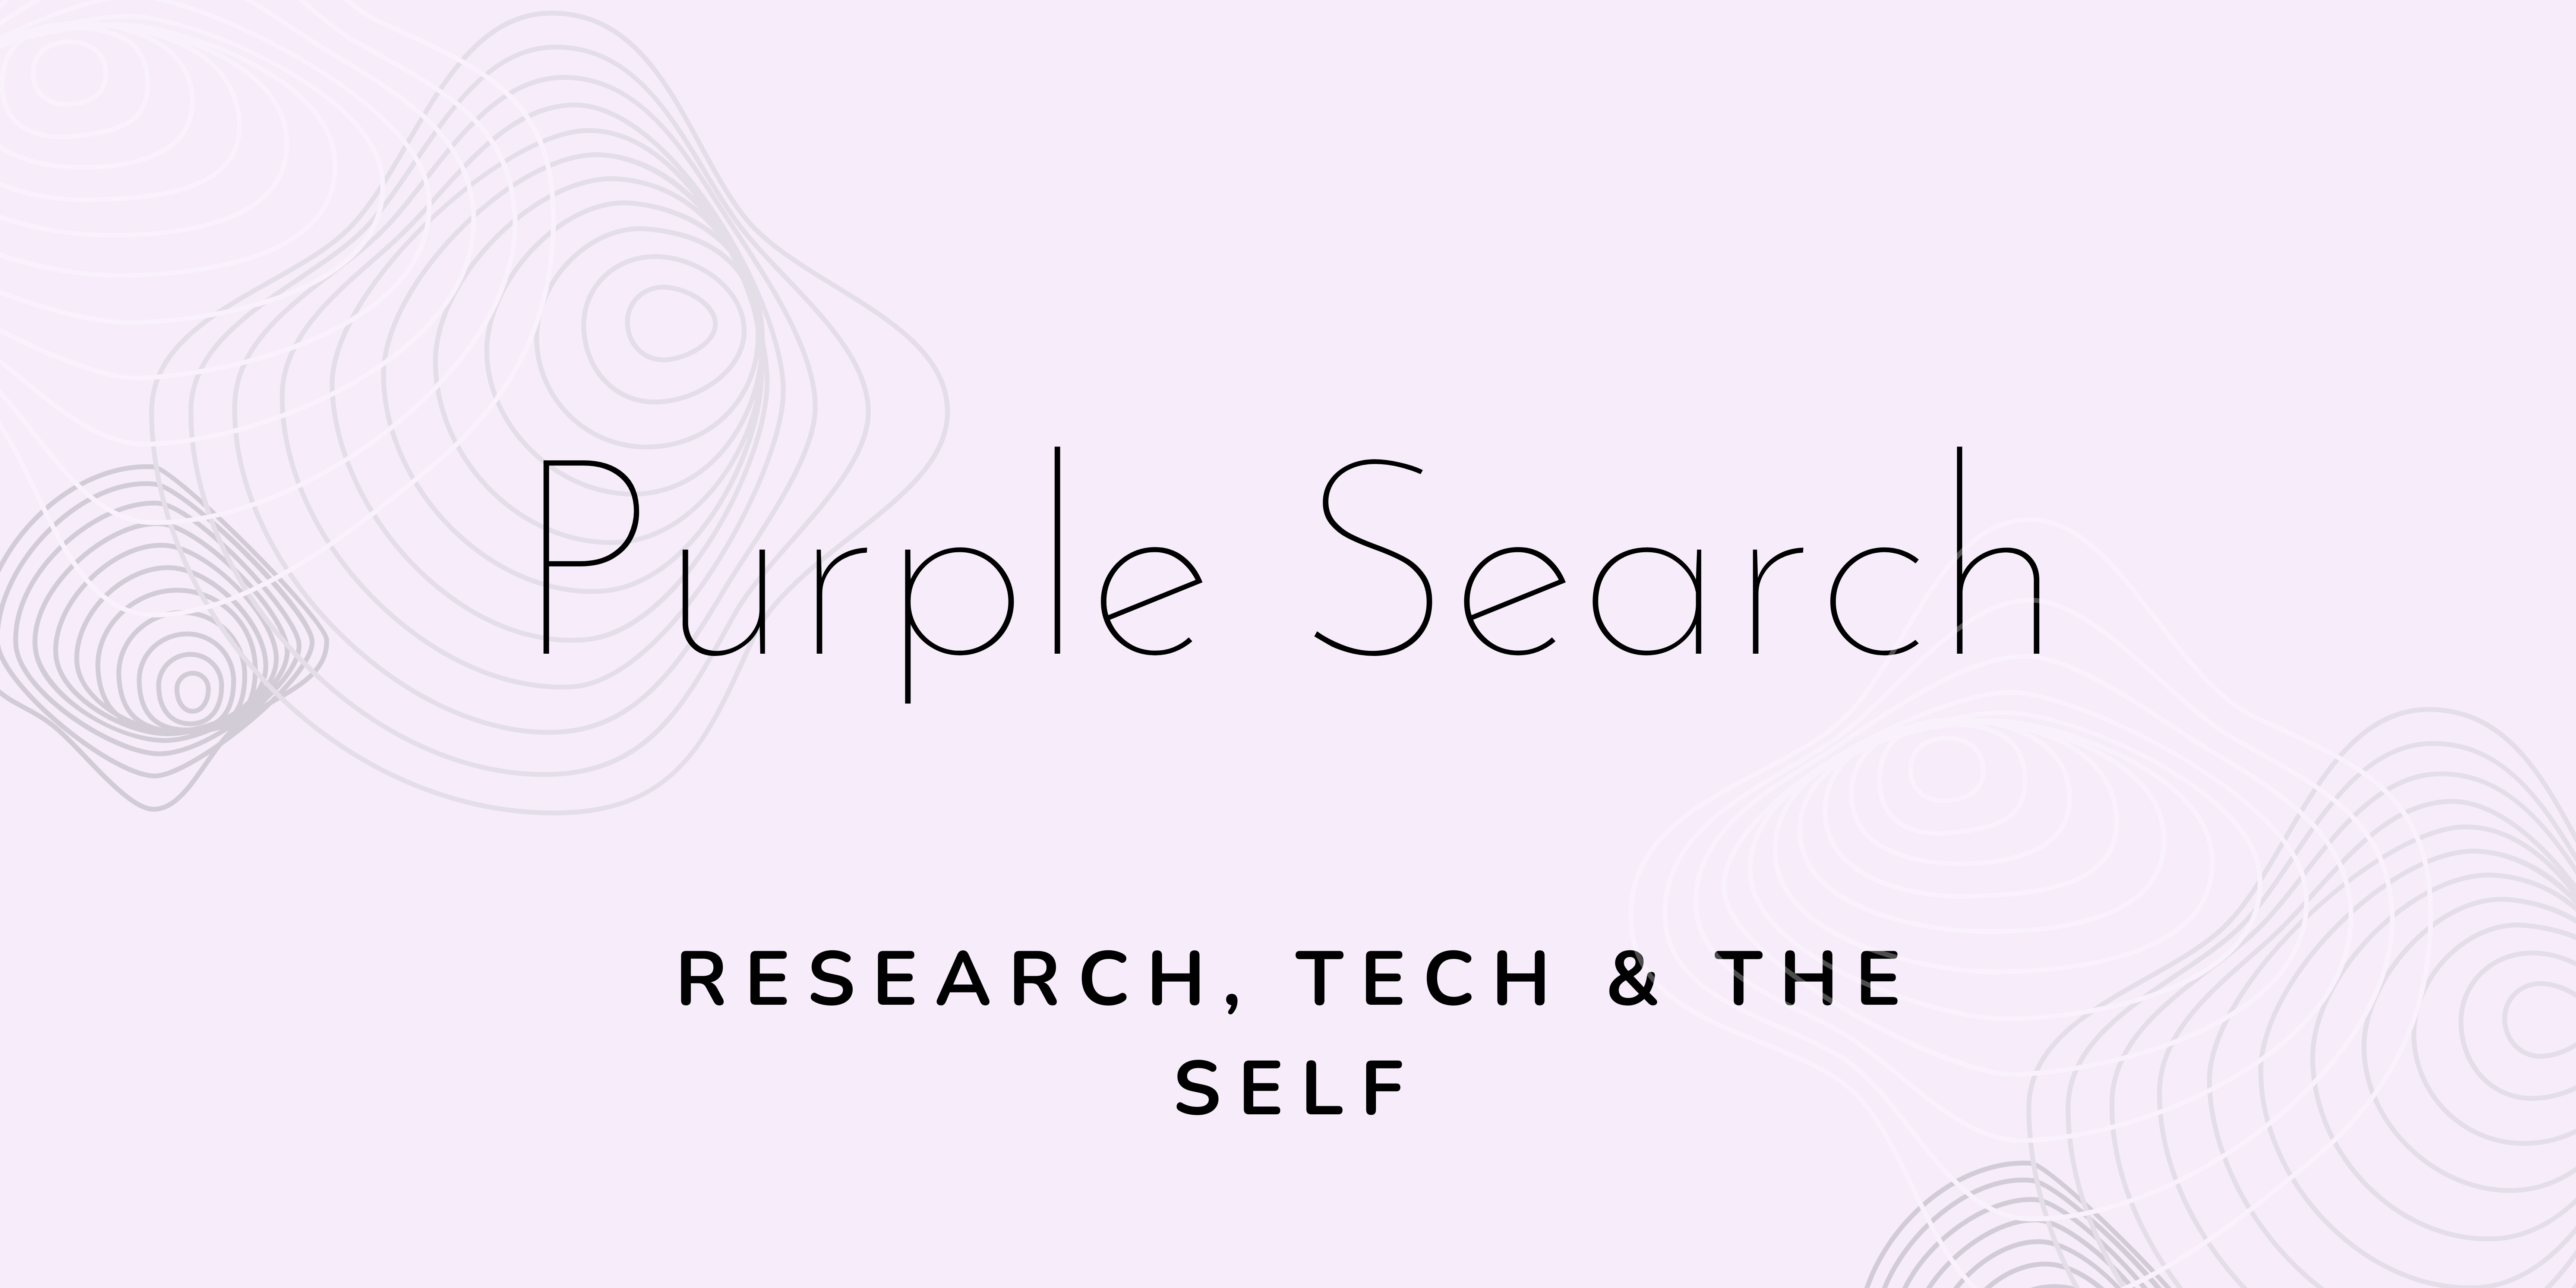 purple search: research, tech & the self